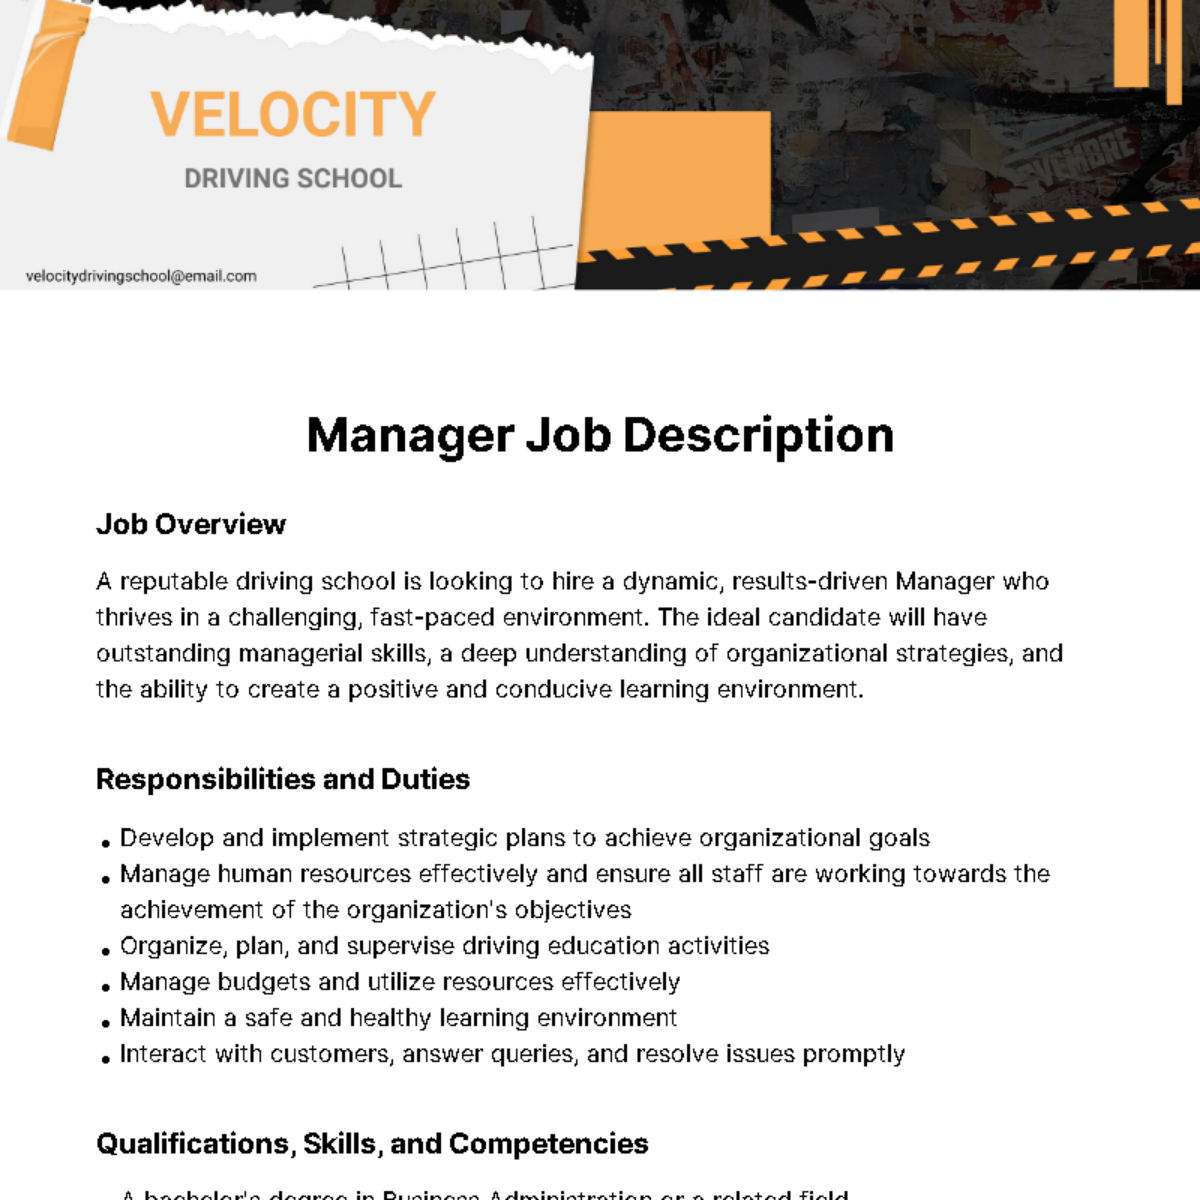 Manager Job Description Template